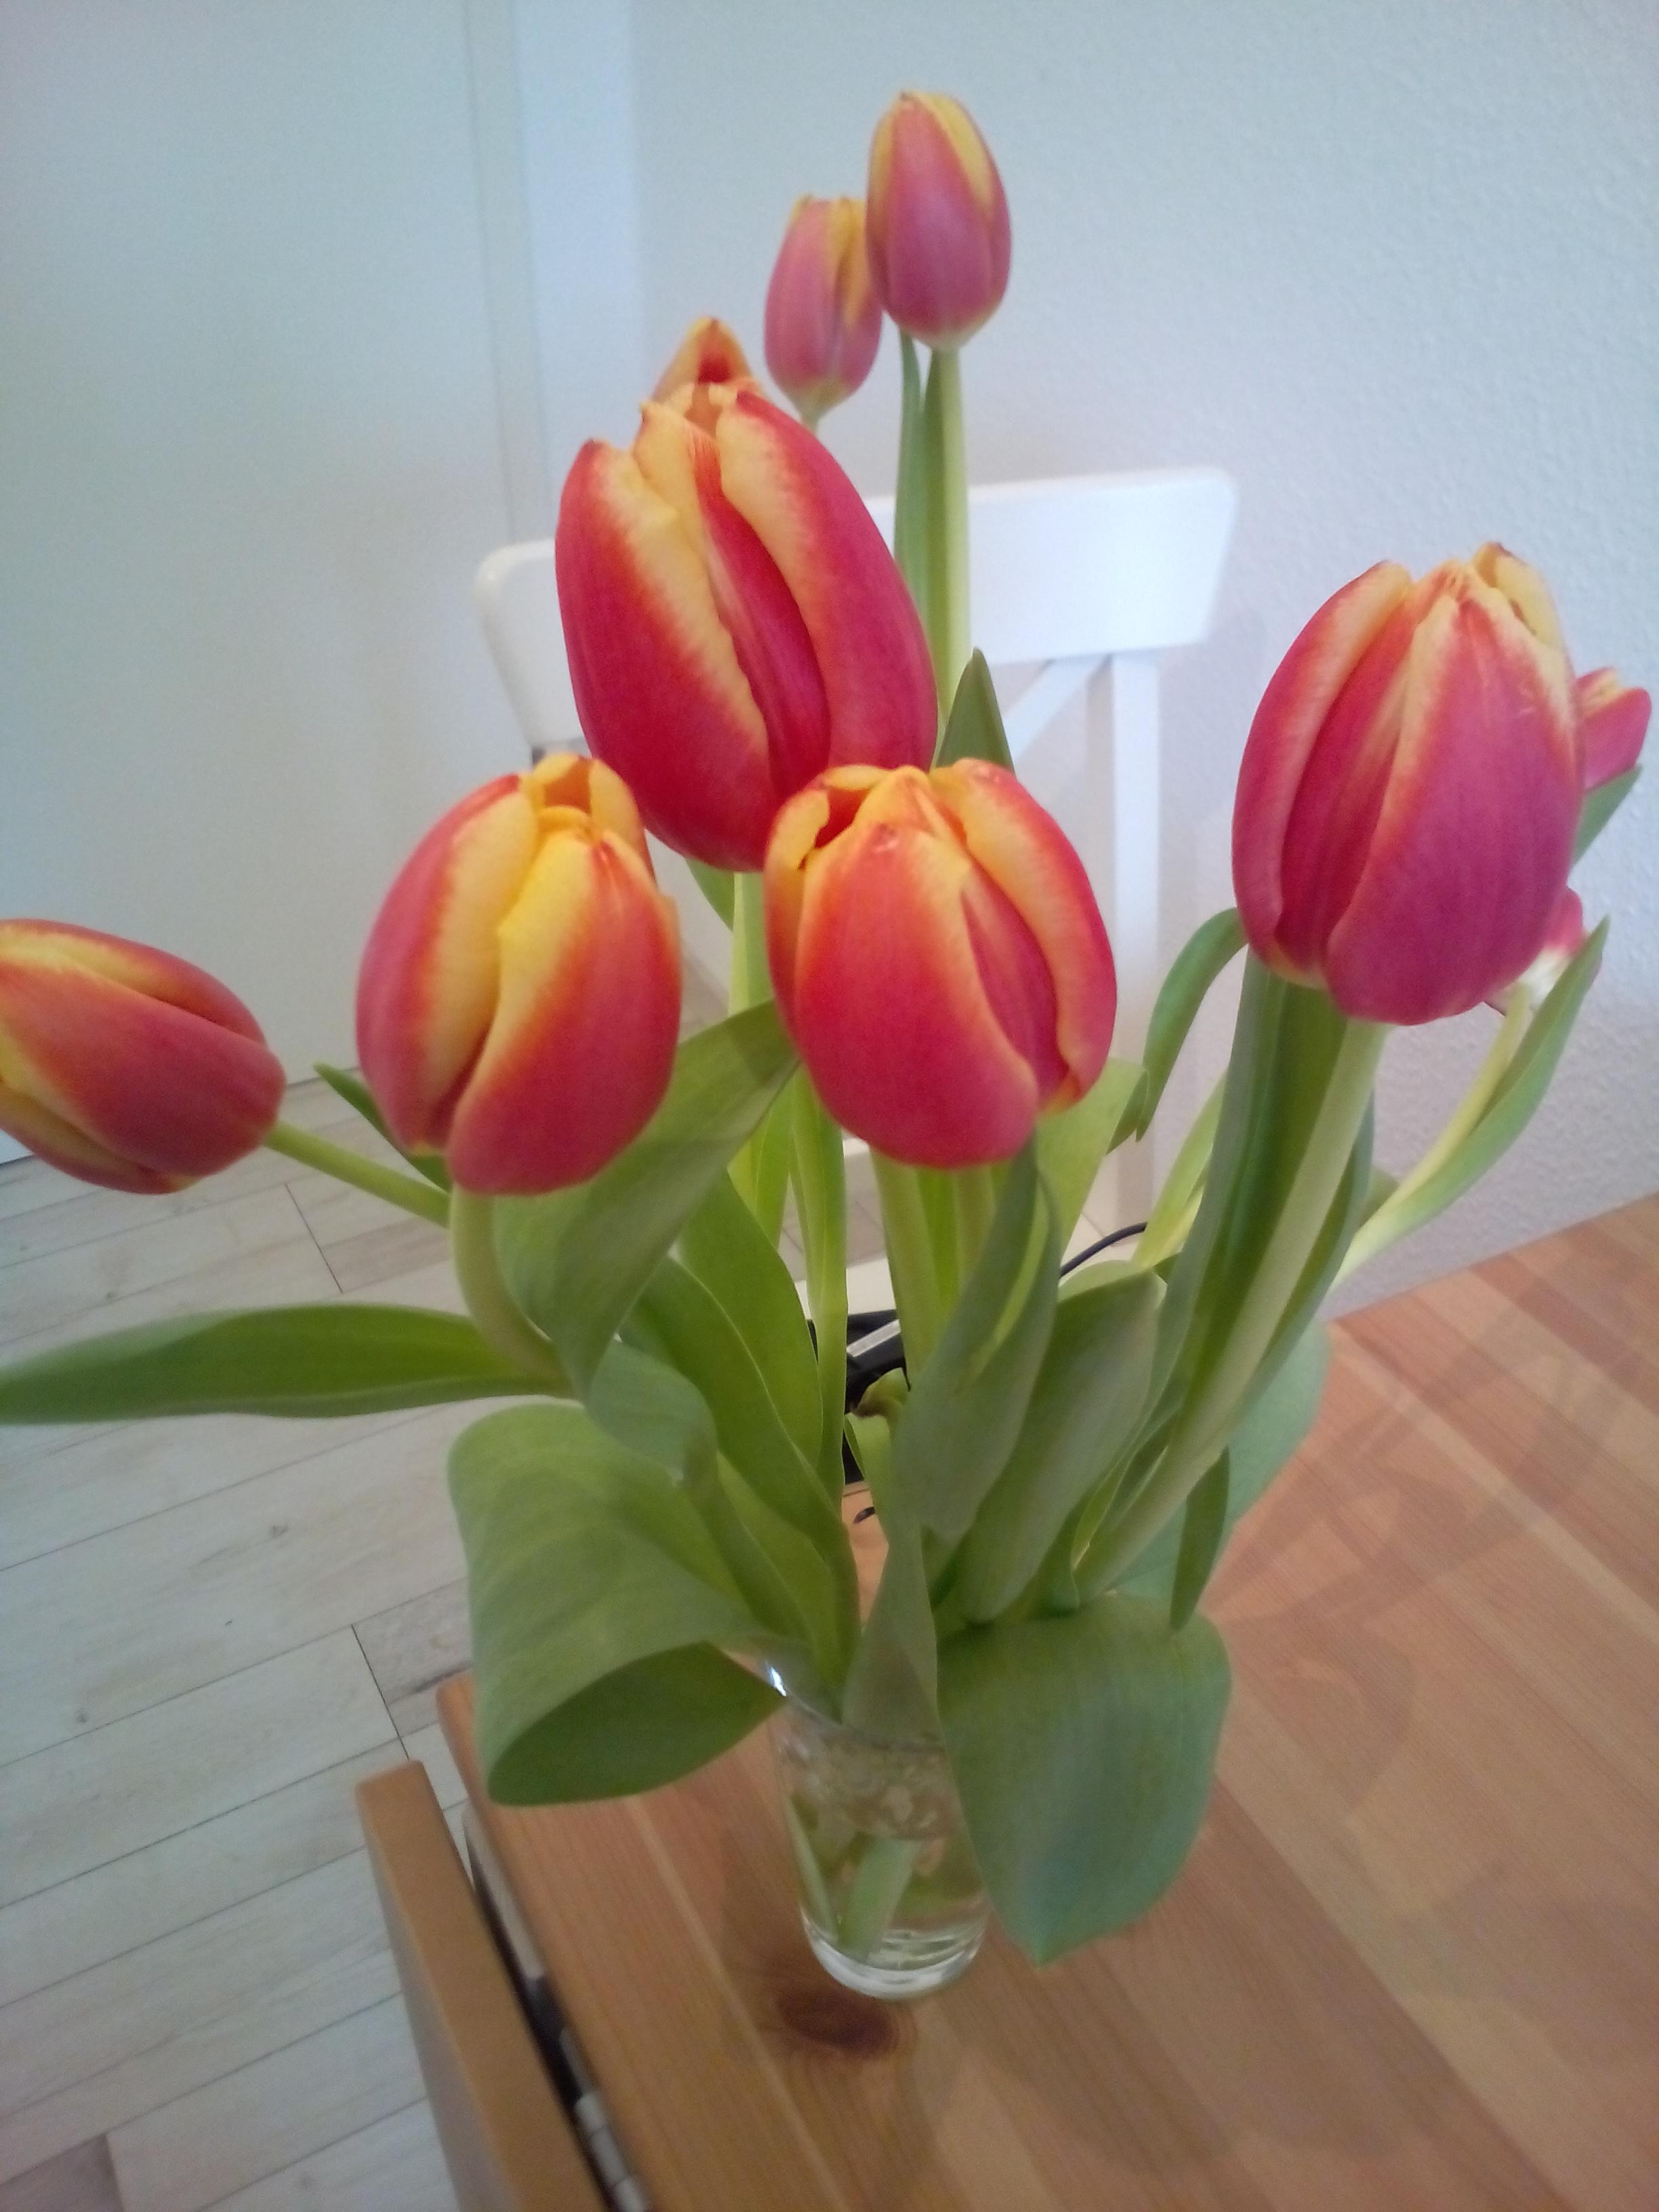 Es duftet nach Frühling
#Tulpen